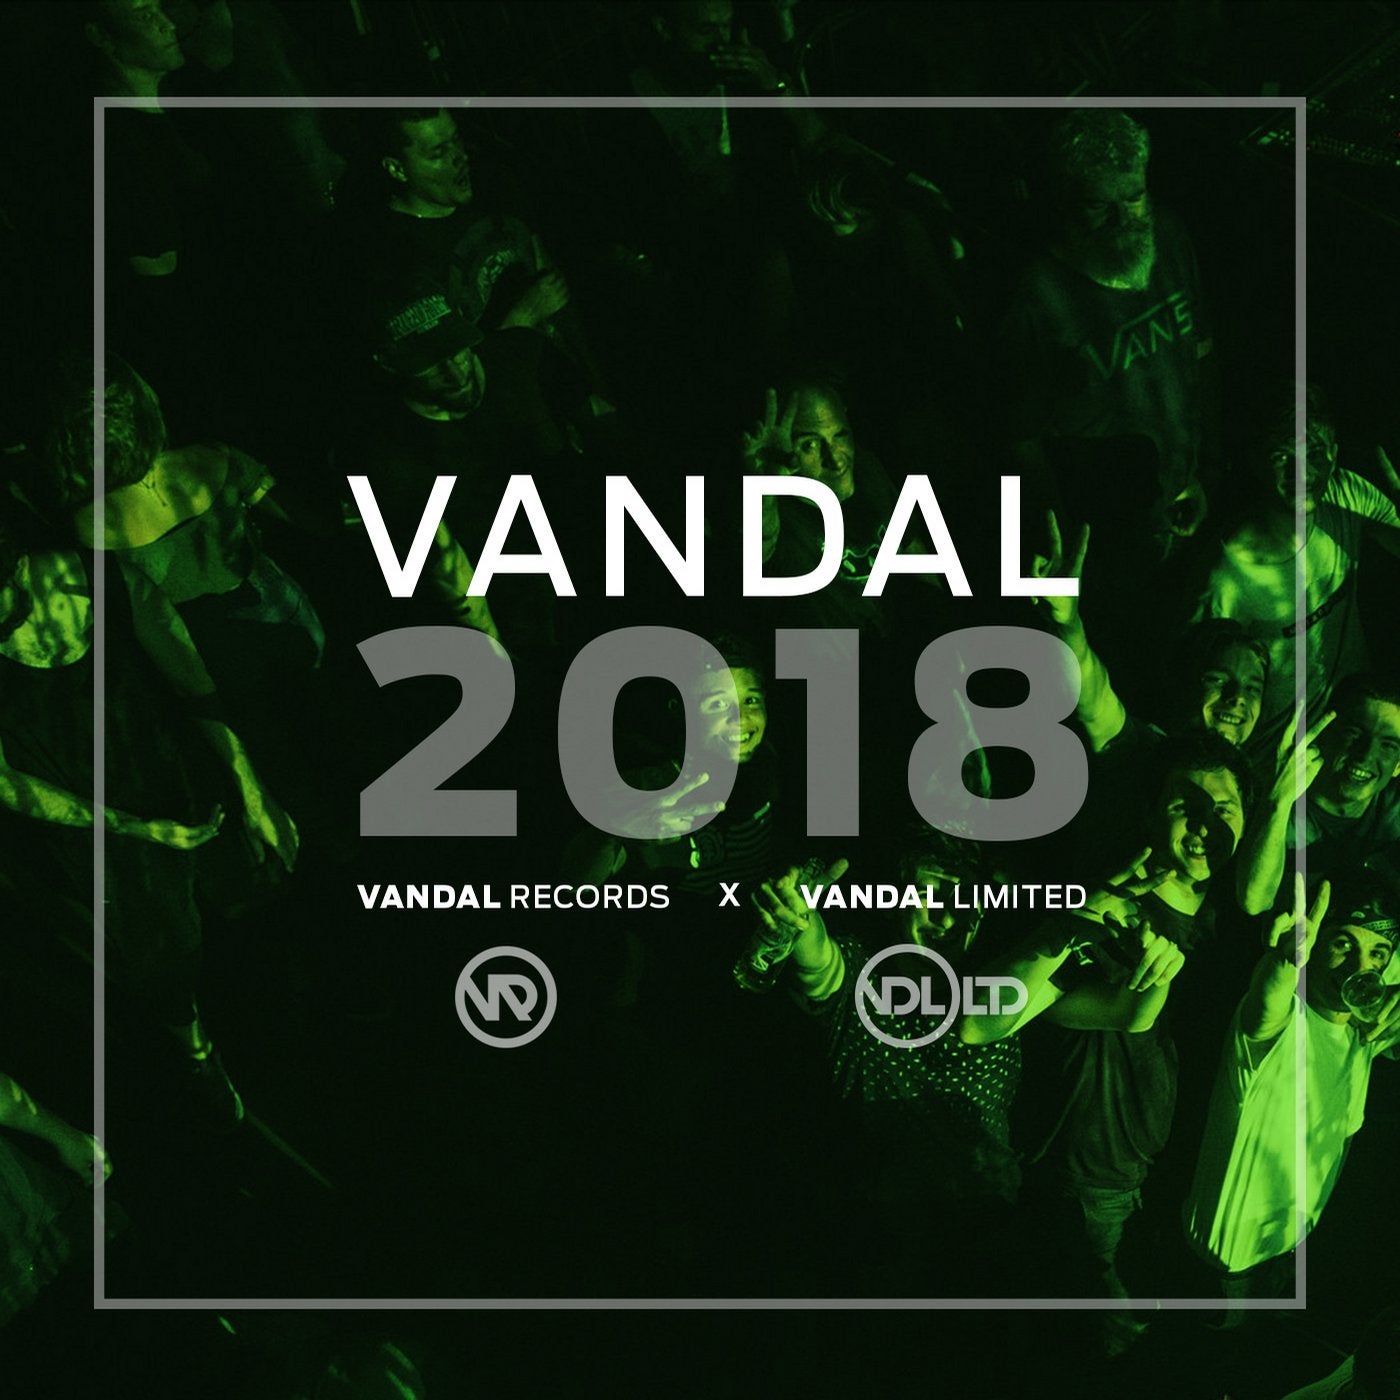 VANDAL 2018